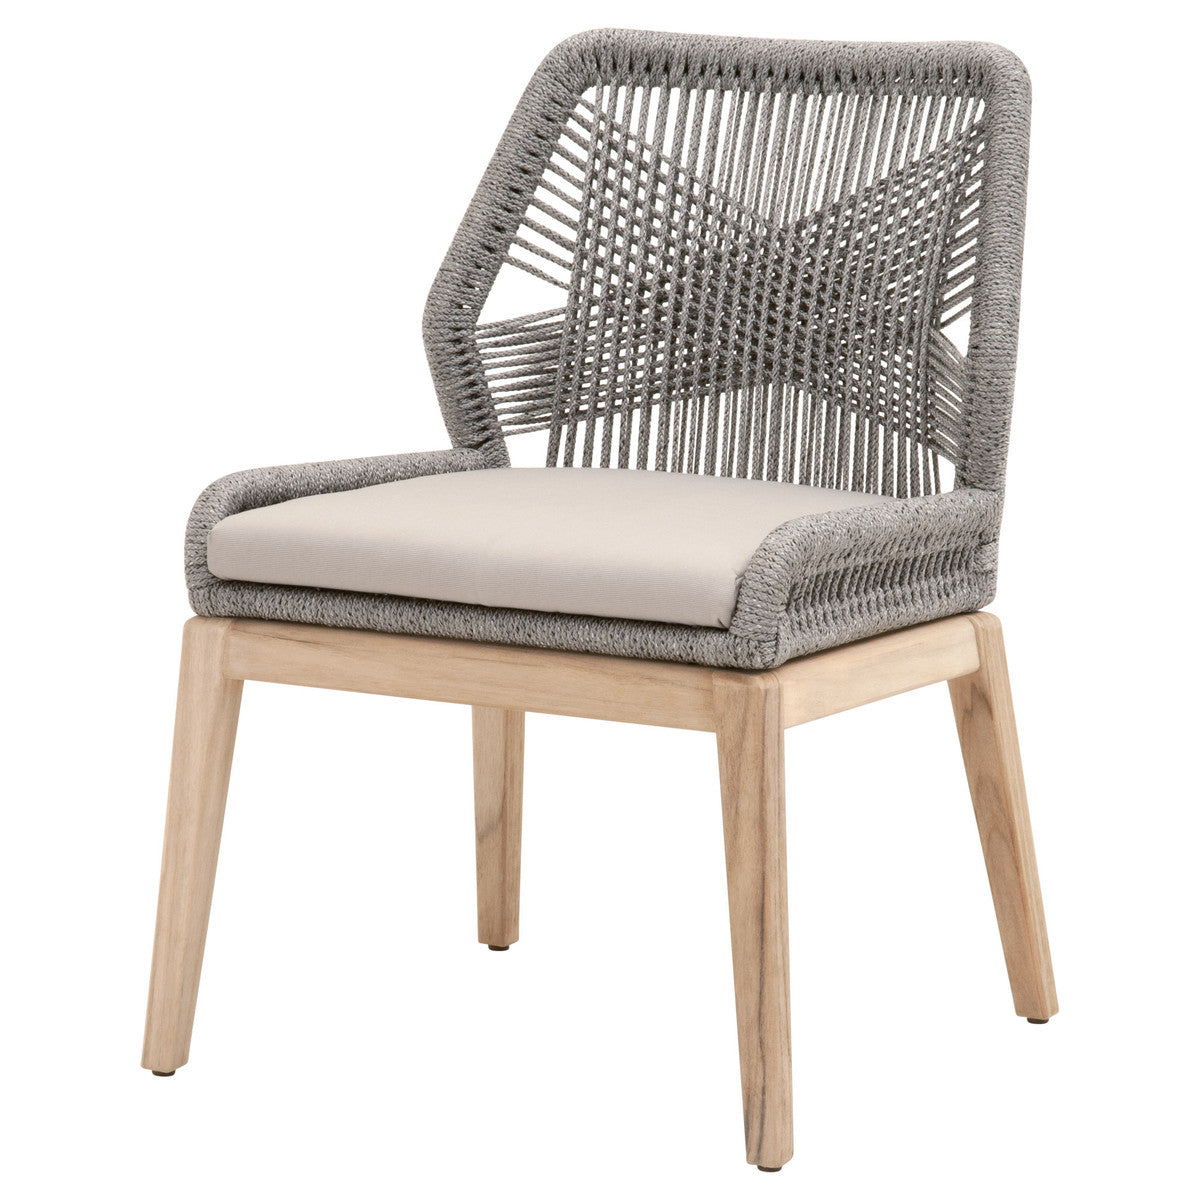 Loom Outdoor DINING Chair- Platinum Rope, Smoke Gray, Gray Teak